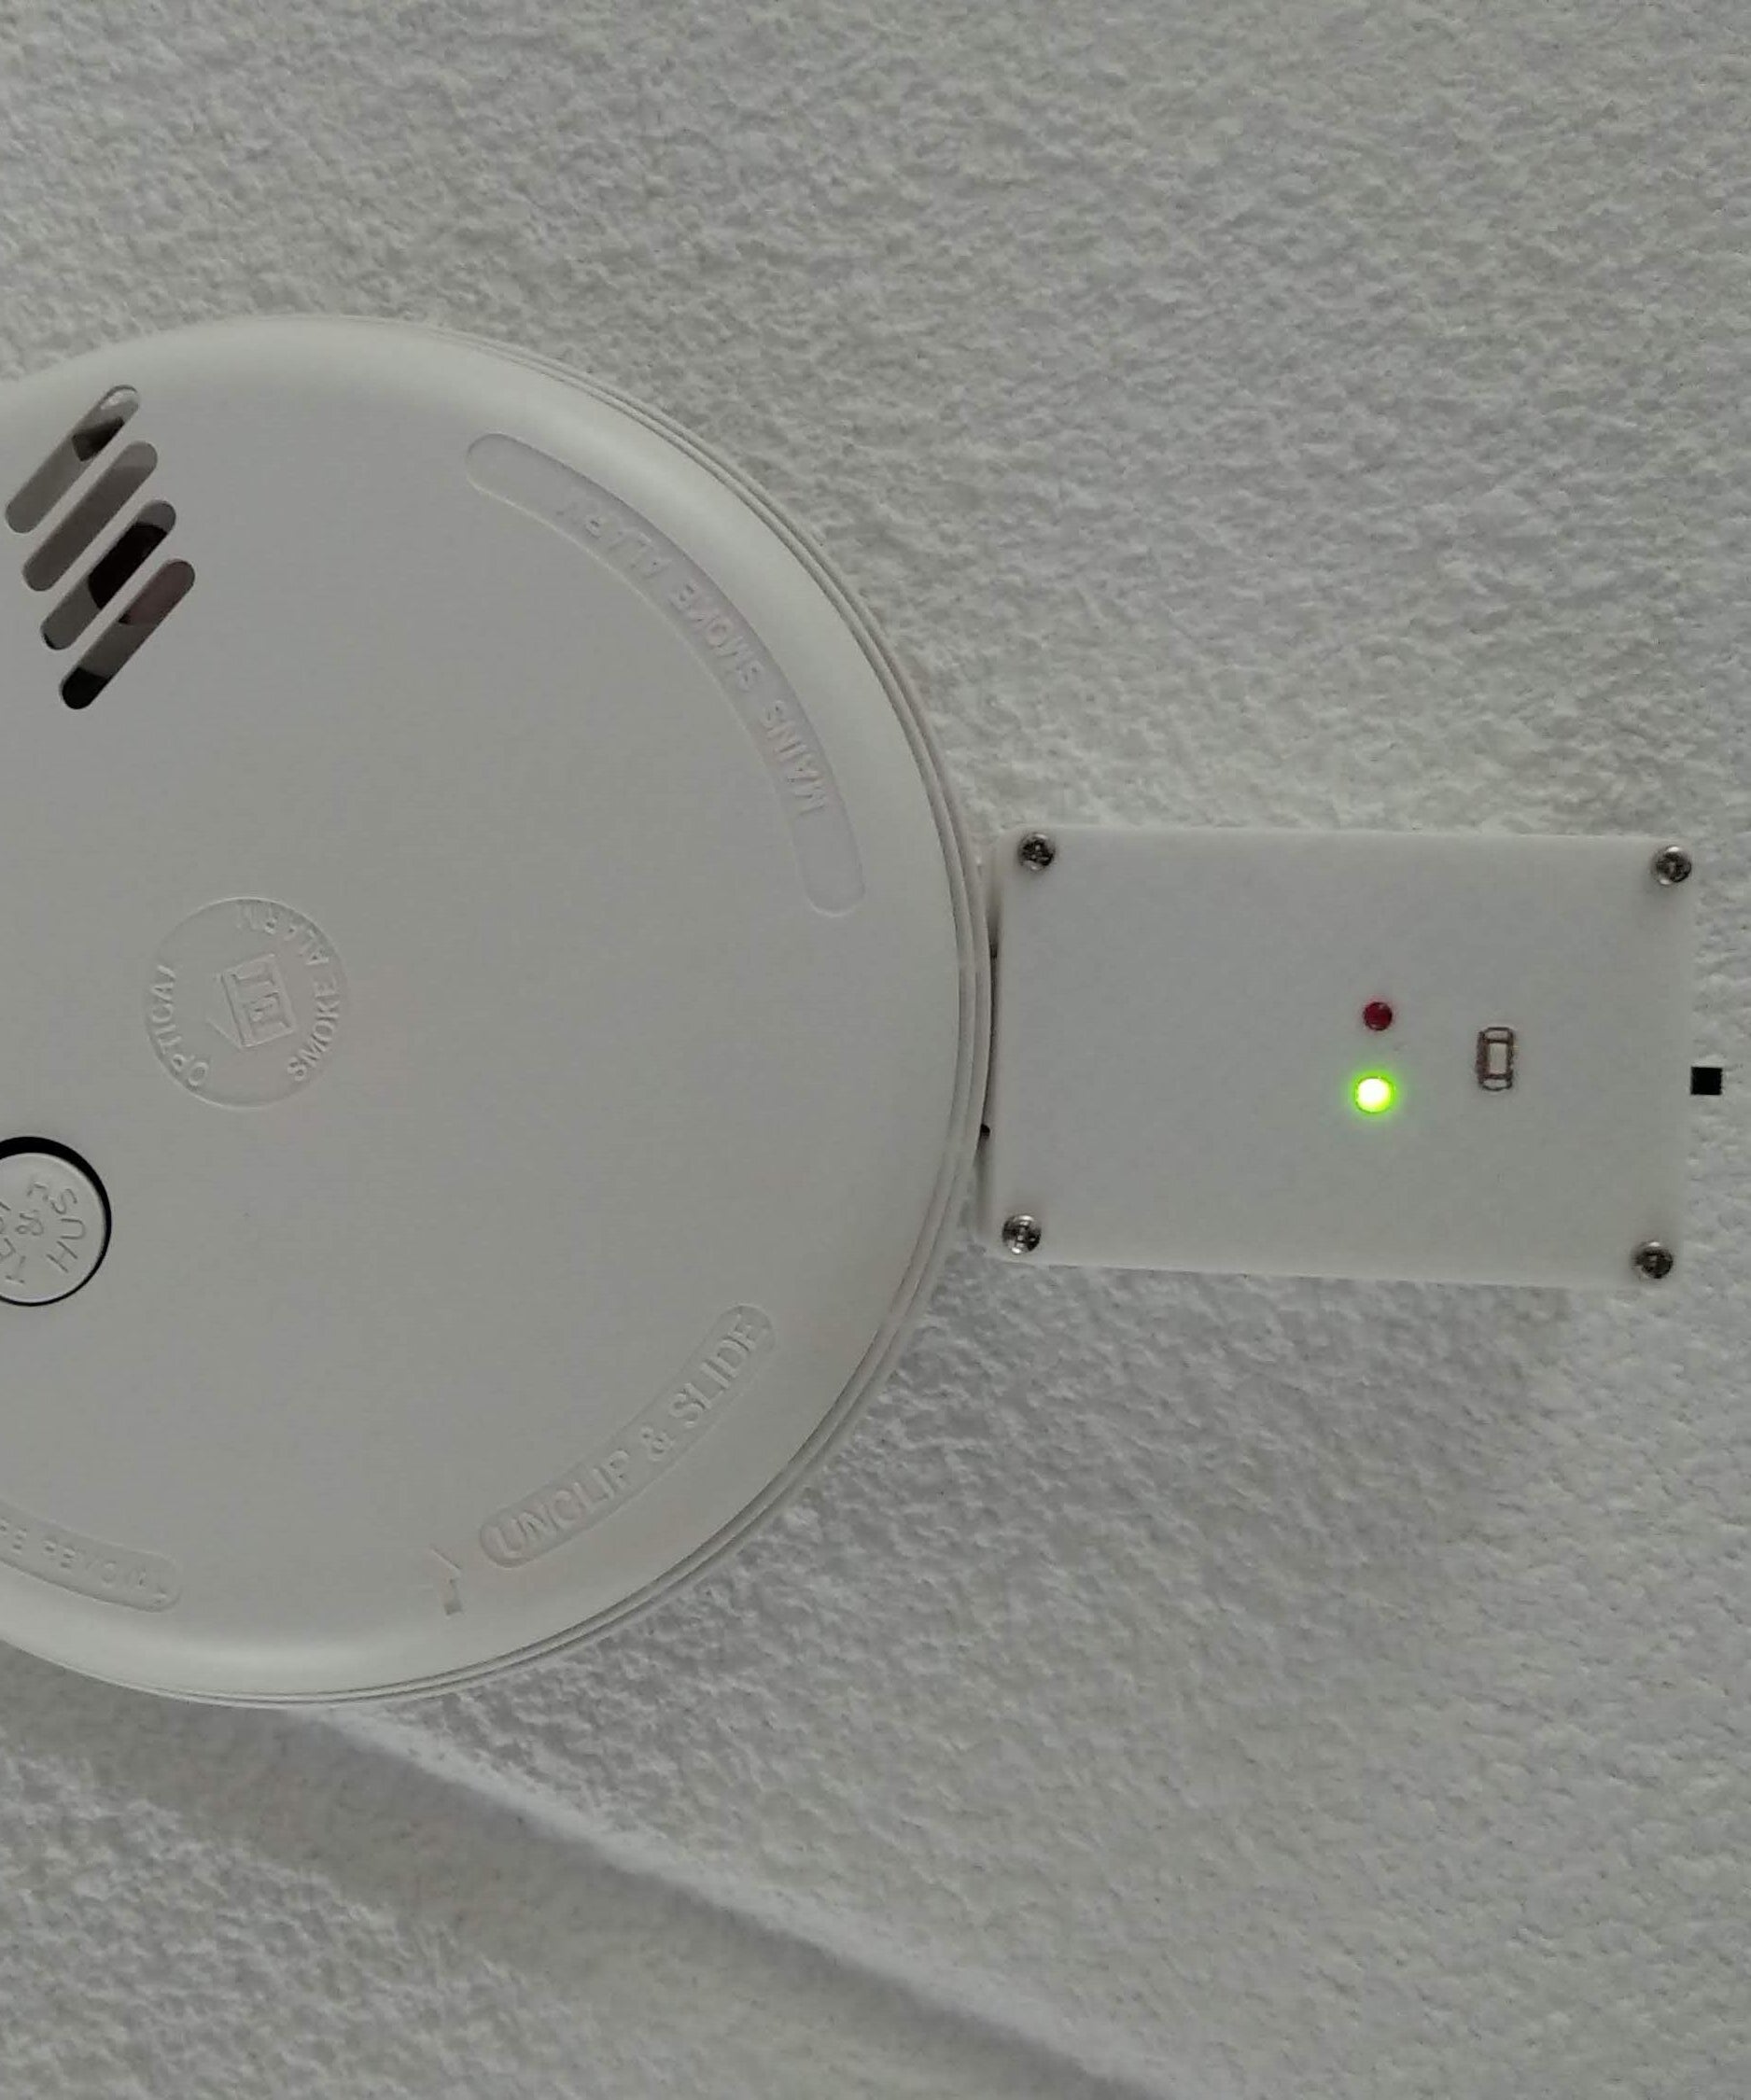 Tiny Fire Alarm Detector Esp8266 MQTT IFTTT Home Automation